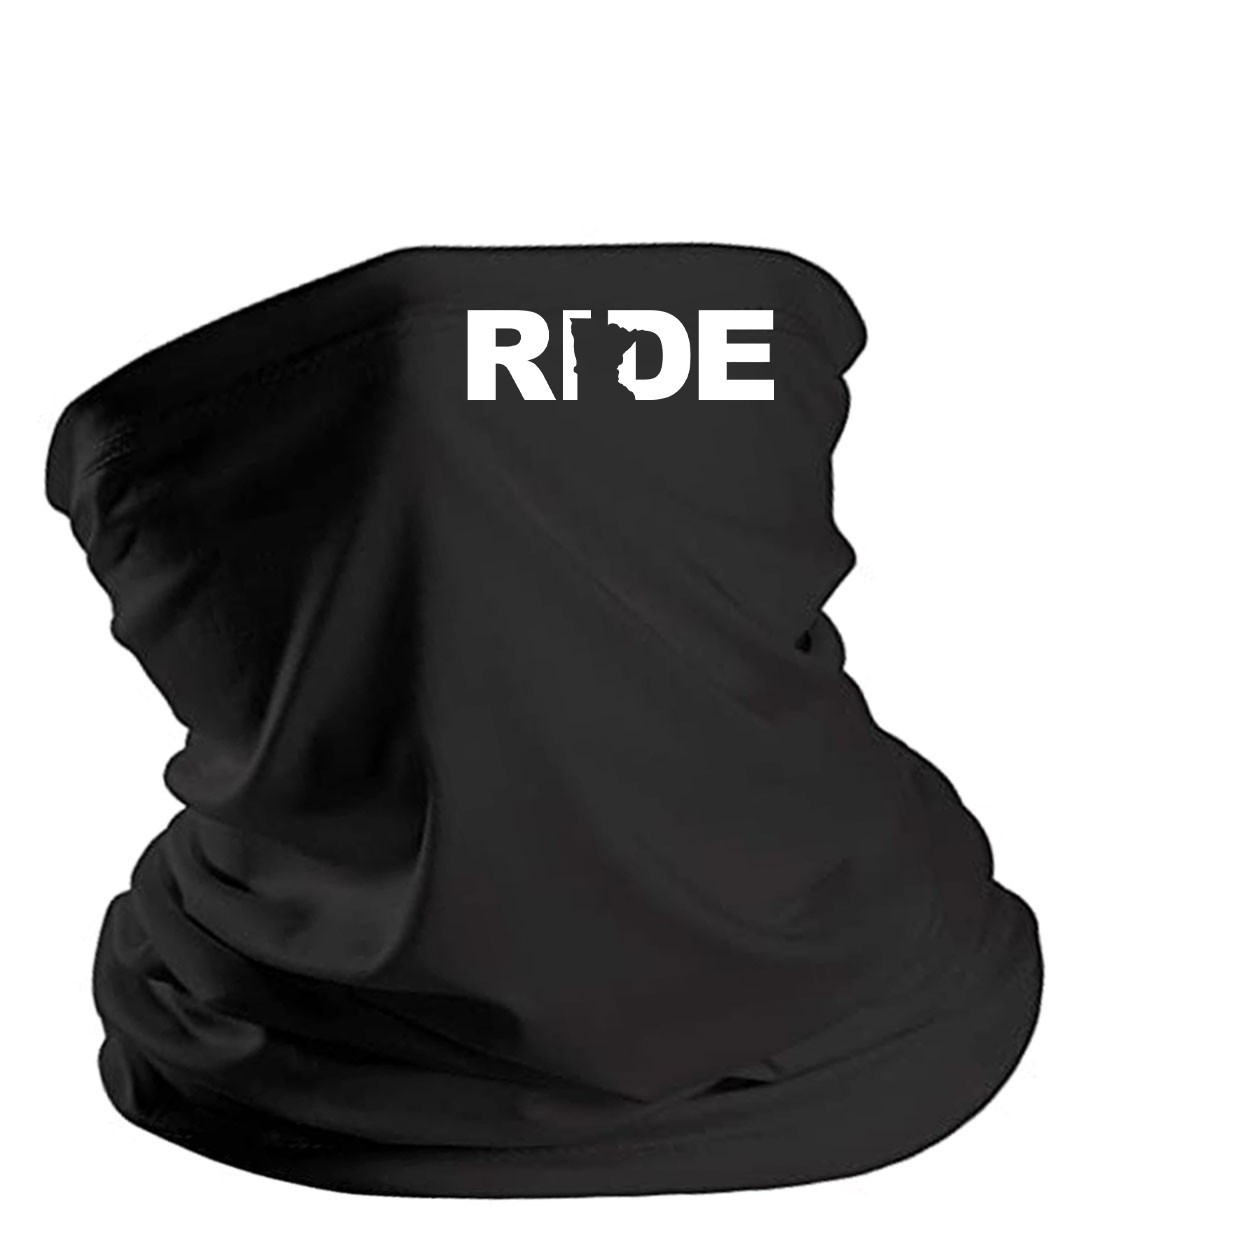 Ride Minnesota Night Out Lightweight Neck Gaiter Face Mask Black